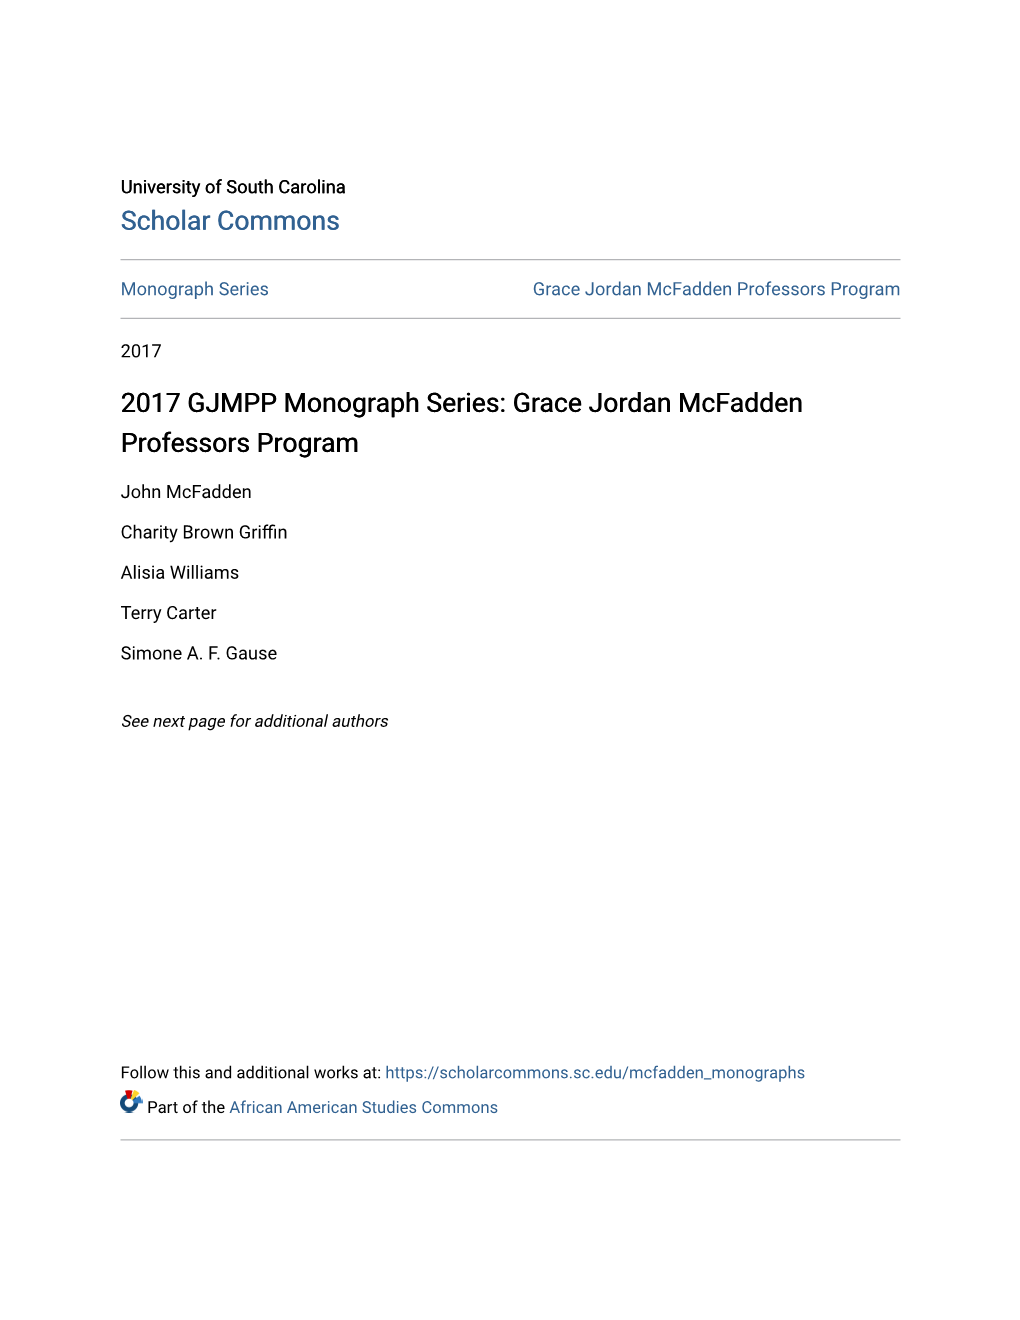 2017 GJMPP Monograph Series: Grace Jordan Mcfadden Professors Program